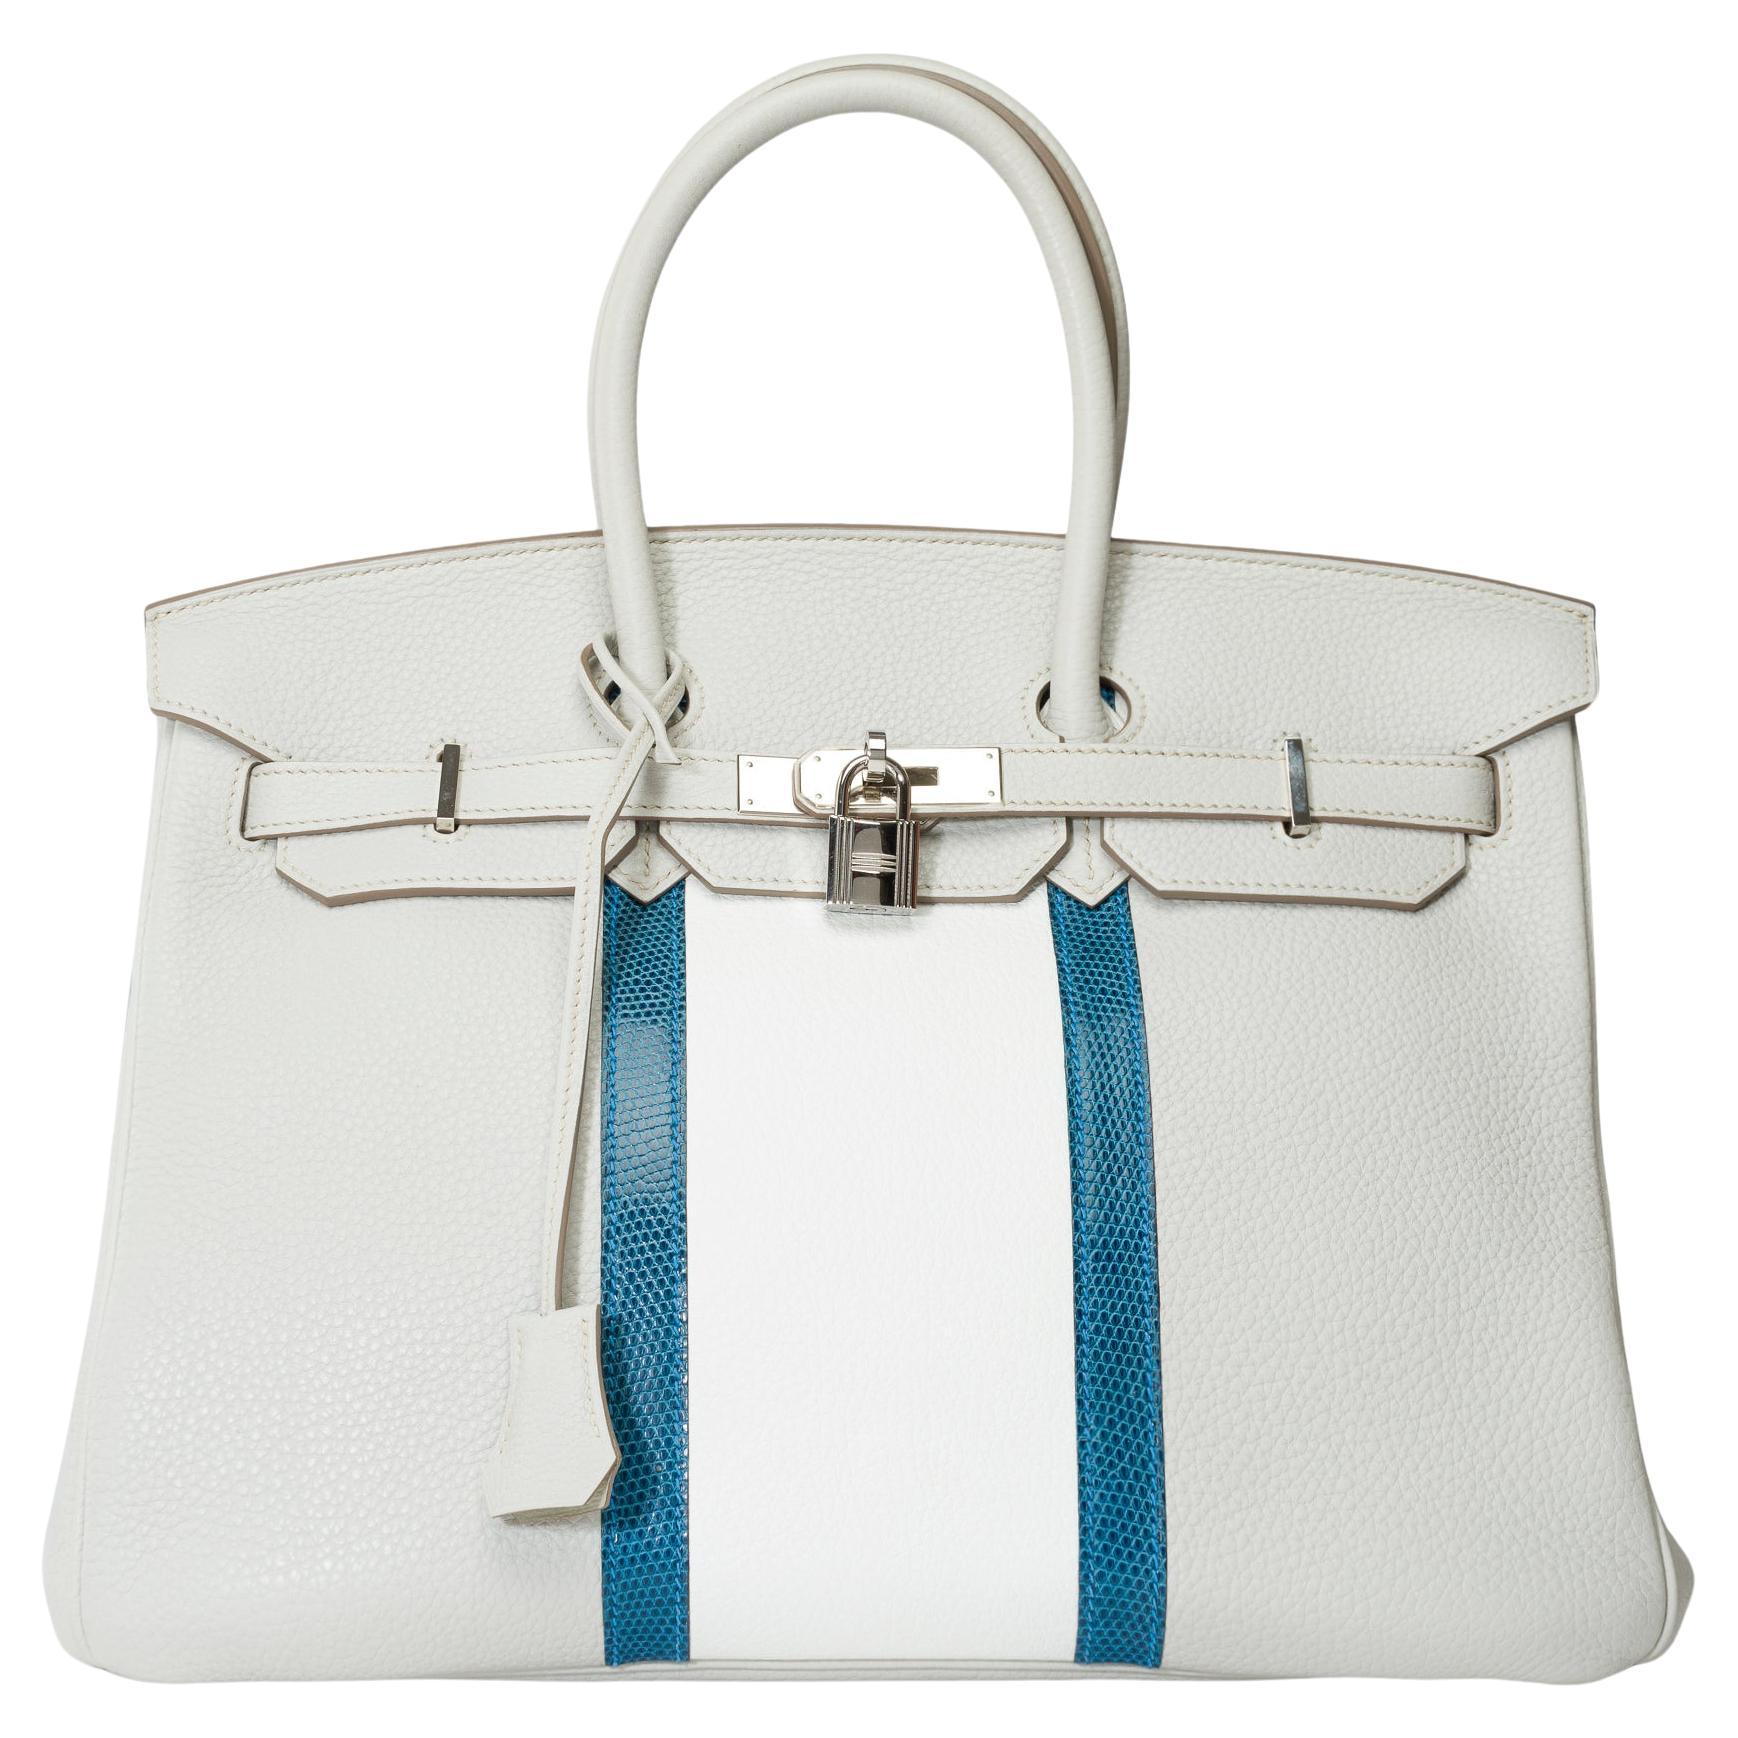 Rare Hermès Birkin Club 35 handbag in grey, white leather and blue lizard, SHW For Sale